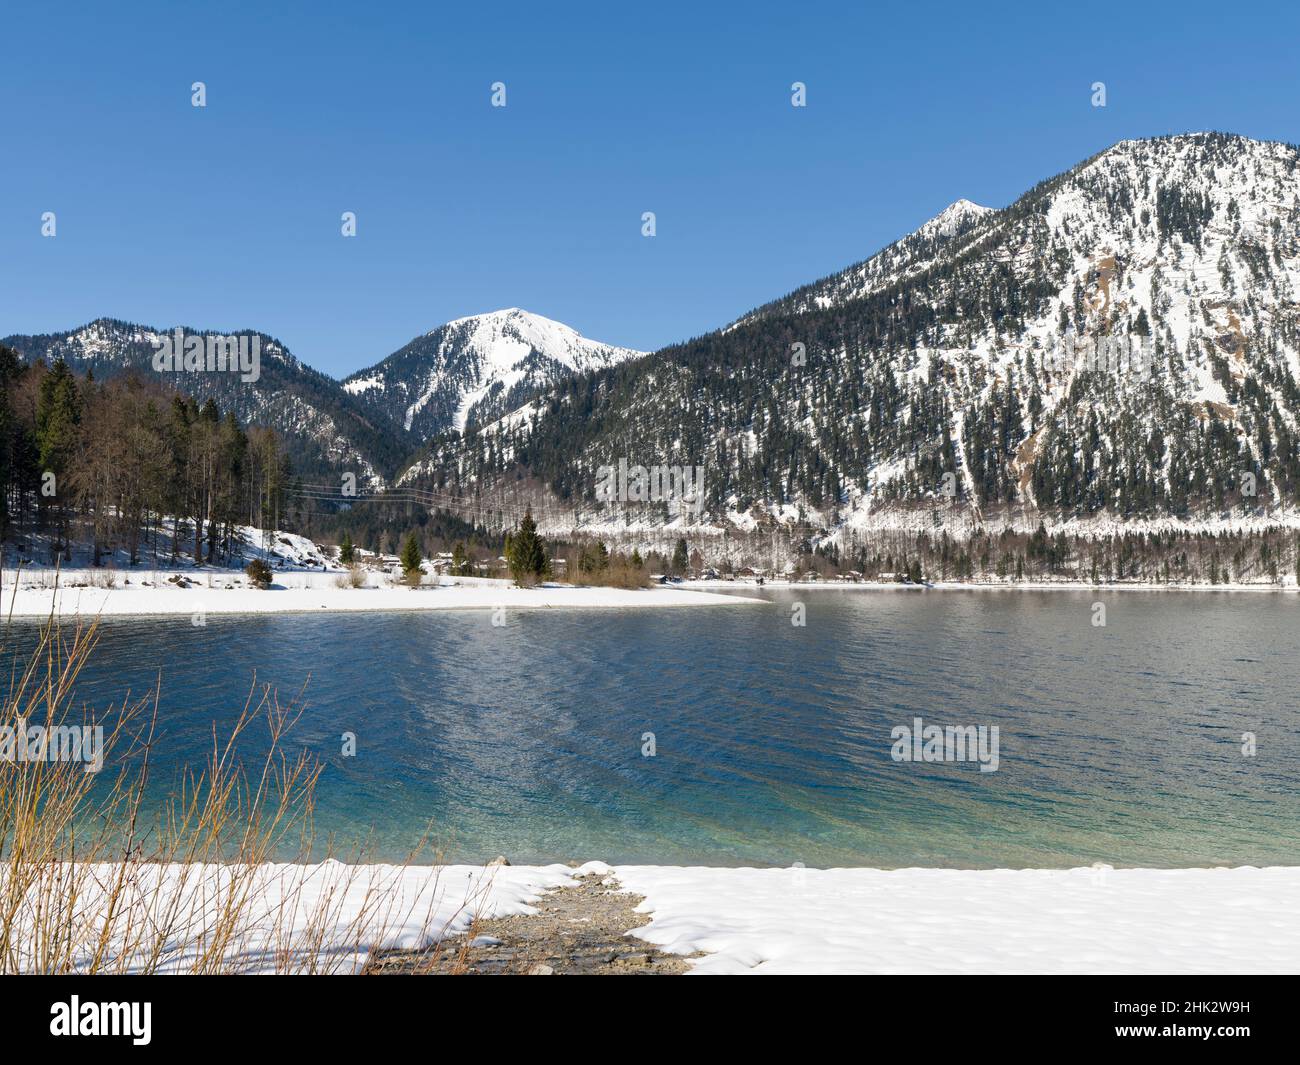 View towards village Walchensee, Mt. Herzogstand and Mt. Heimgarten. Lake Walchensee in the snowy Bavarian Alps. Germany, Bavaria Stock Photo